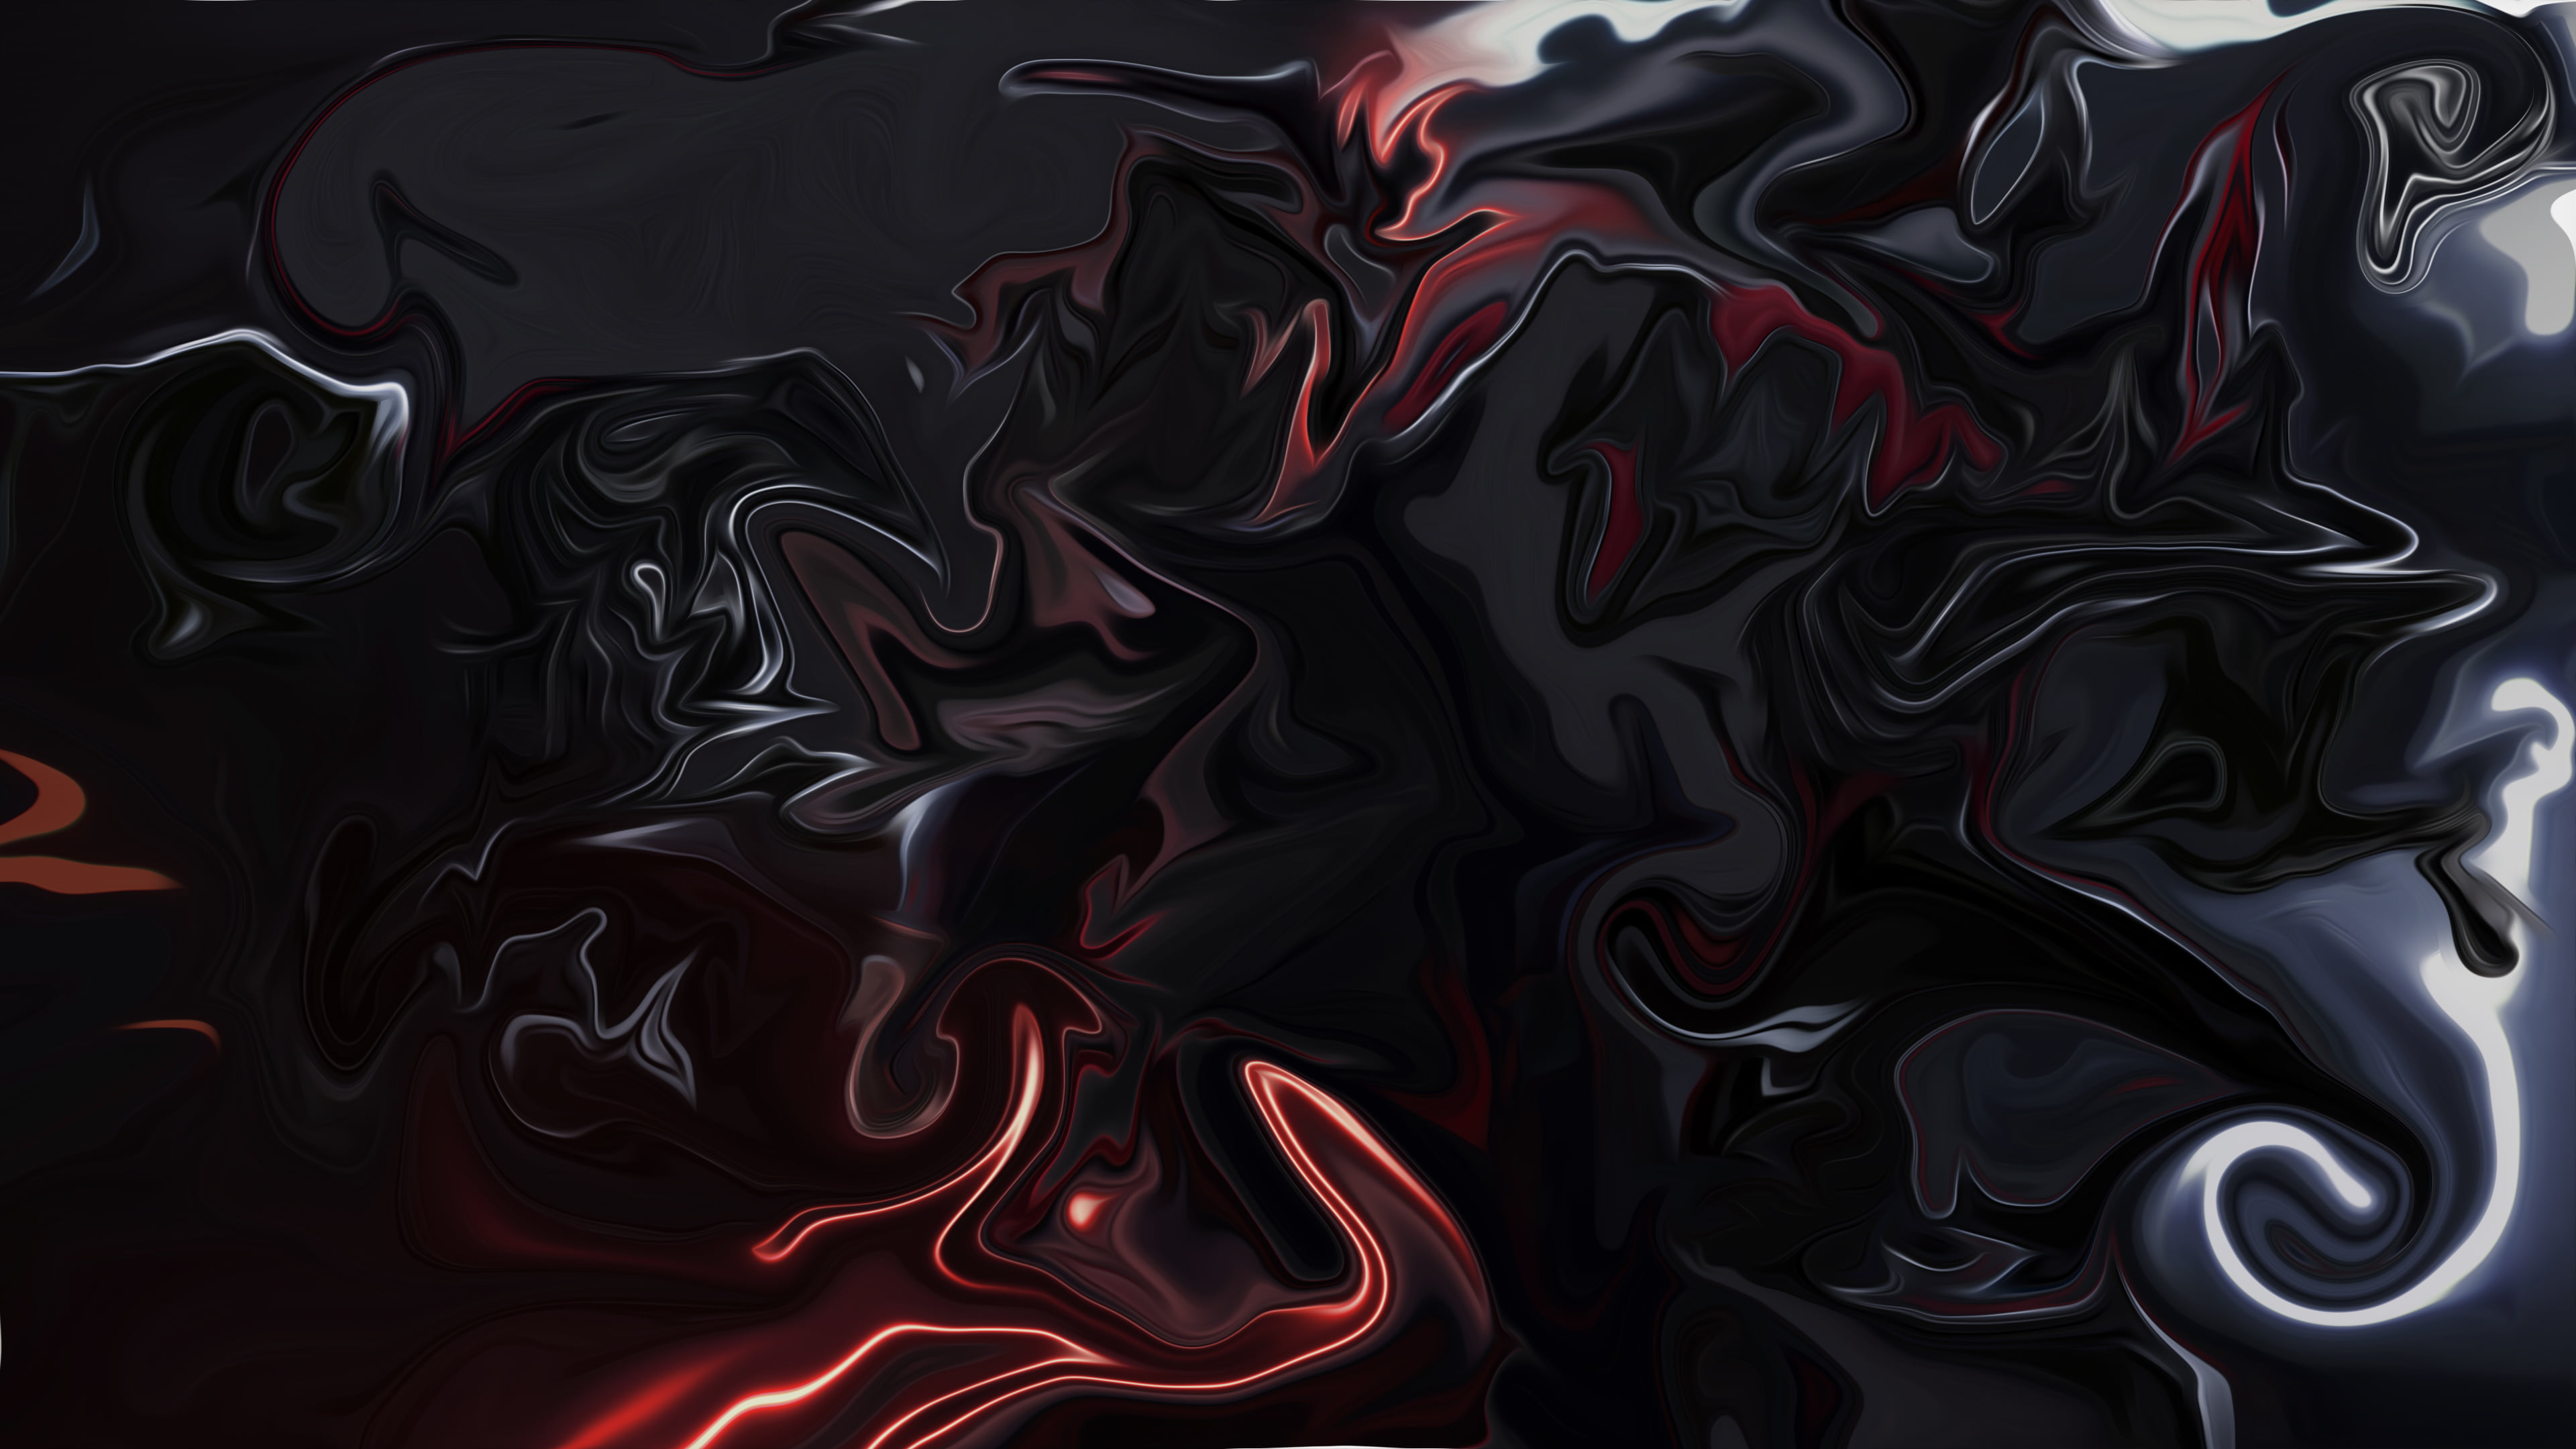 Free Download Hd Wallpaper Abstract Fluid Liquid Shapes Dark Colorful Digital Art 2700